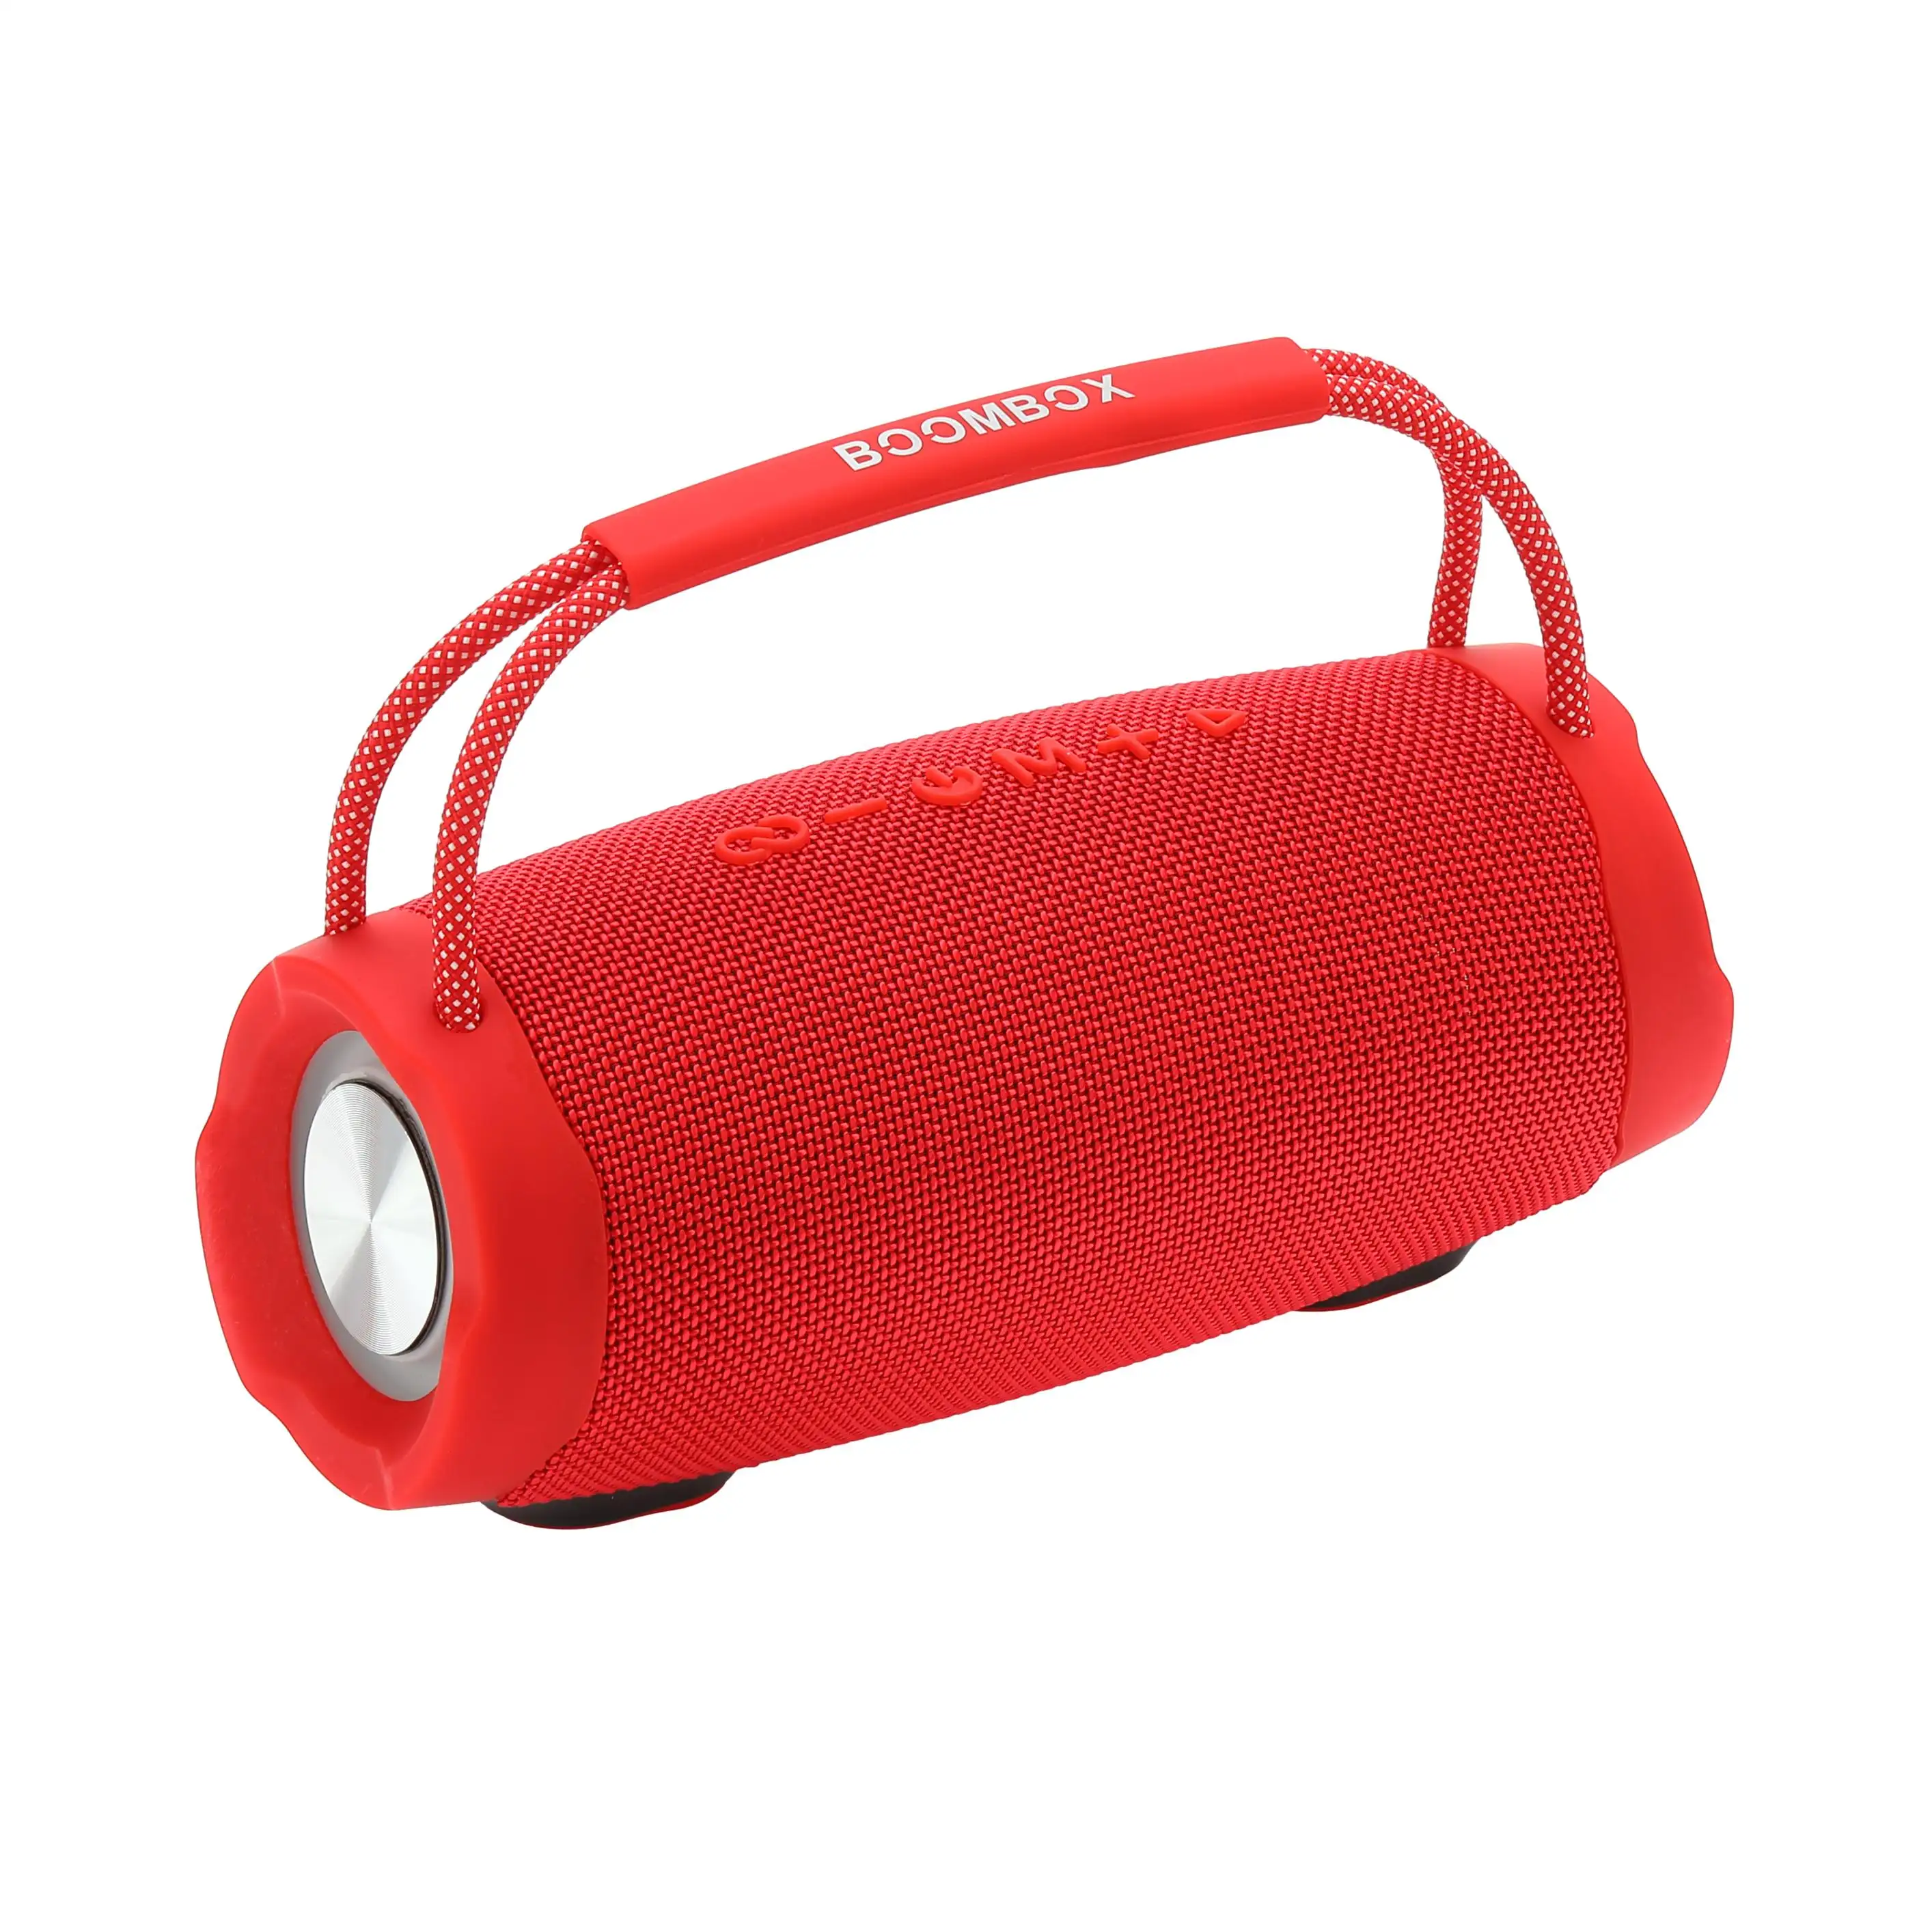 LED Boombox X3 Pro tragbar kabellos Bluetooth boombox 3 Lautsprecher wasserdicht PC Säule Outdoor Musikplayer für Boombox3 Lautsprecher